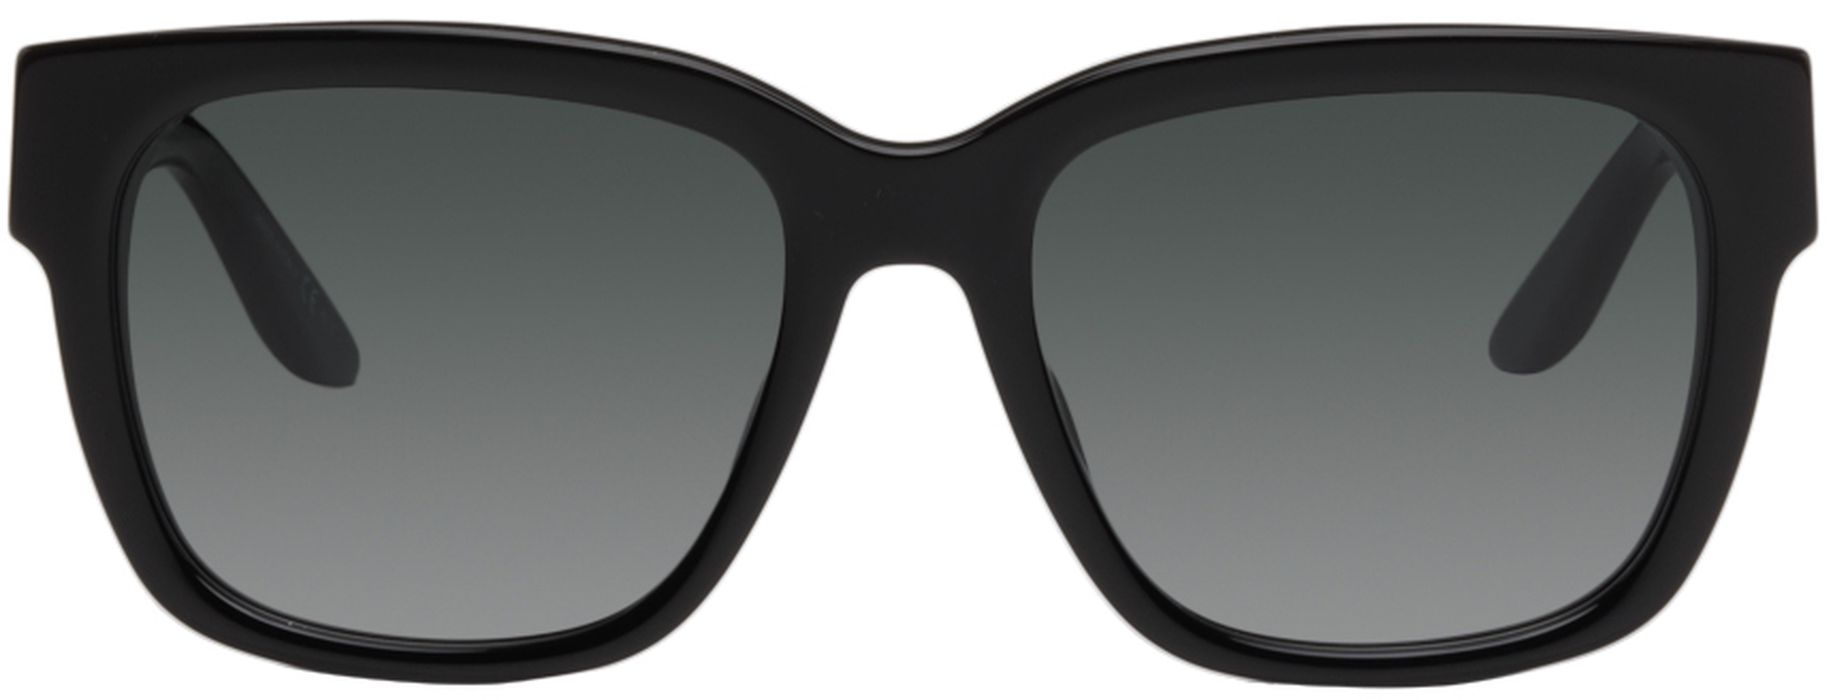 Givenchy Black GV 7211 Sunglasses